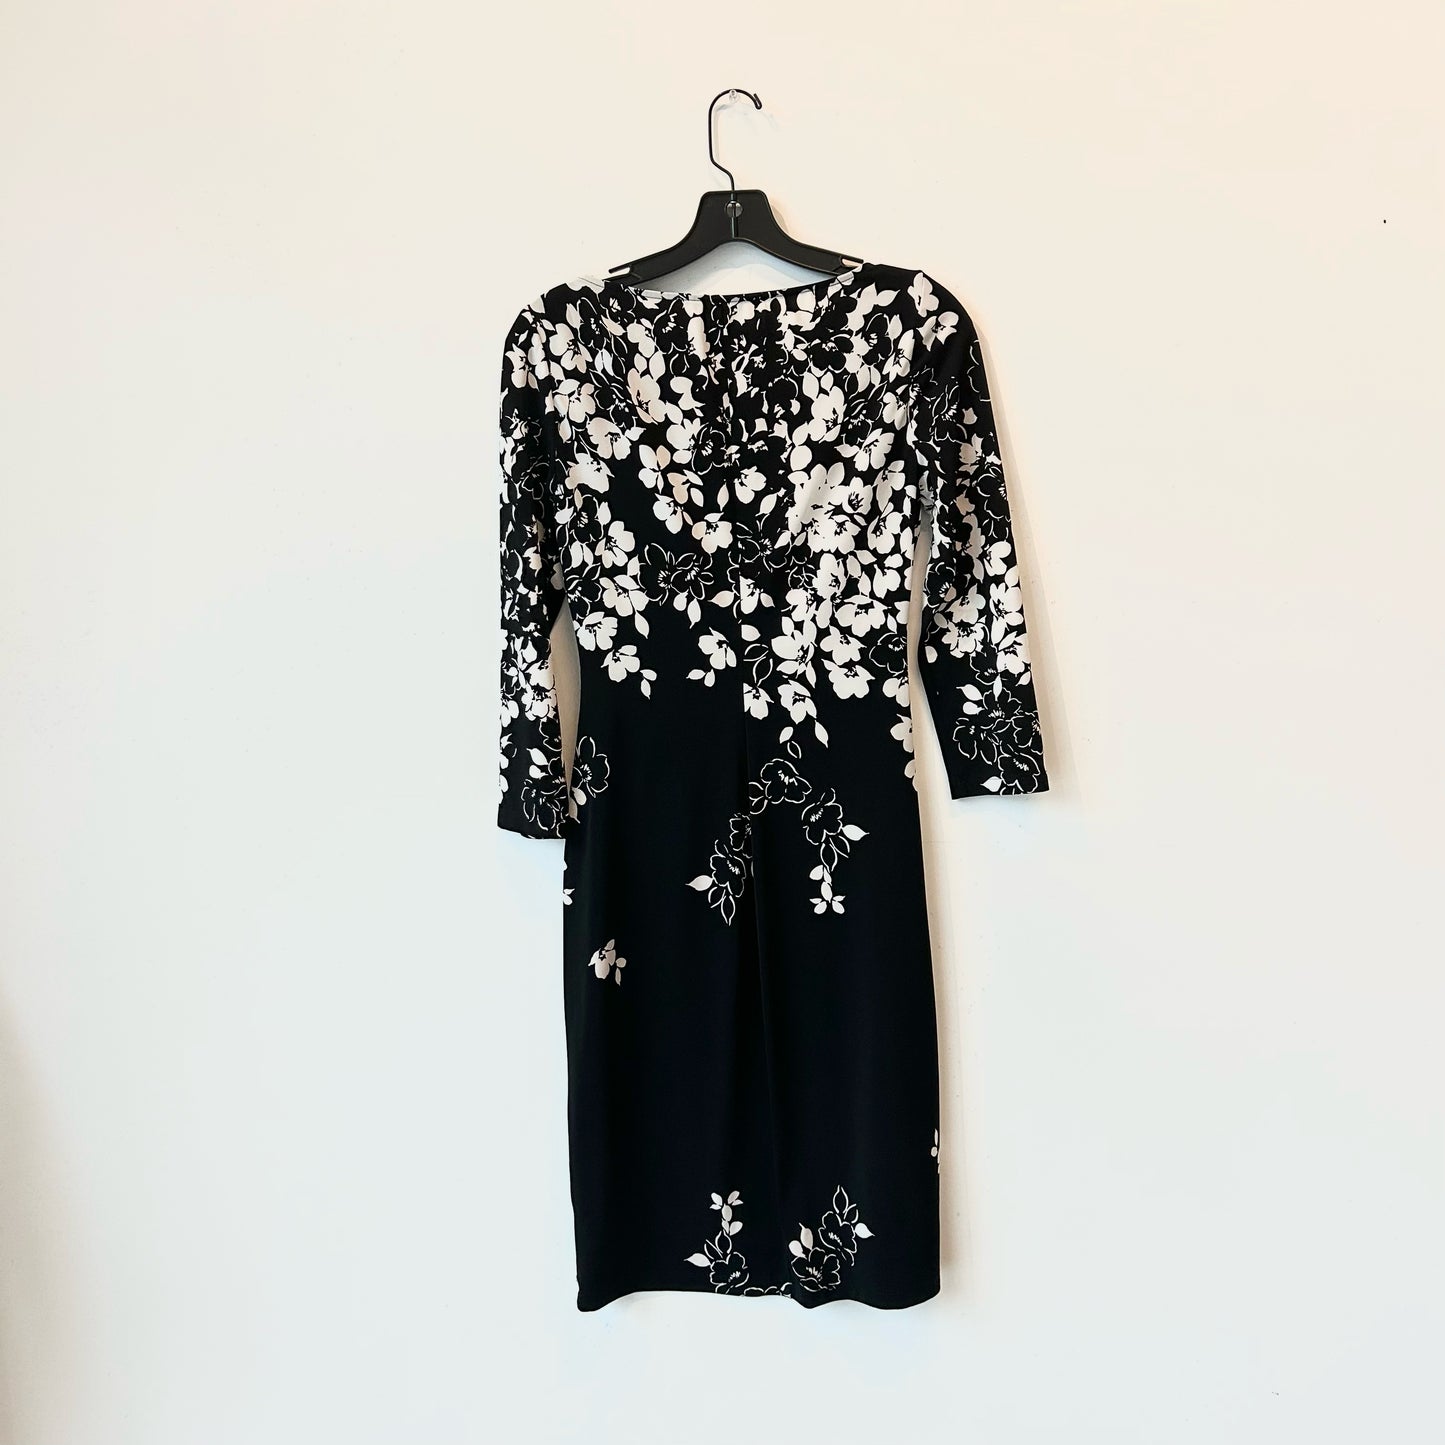 S Chaps Black-White Floral Dress